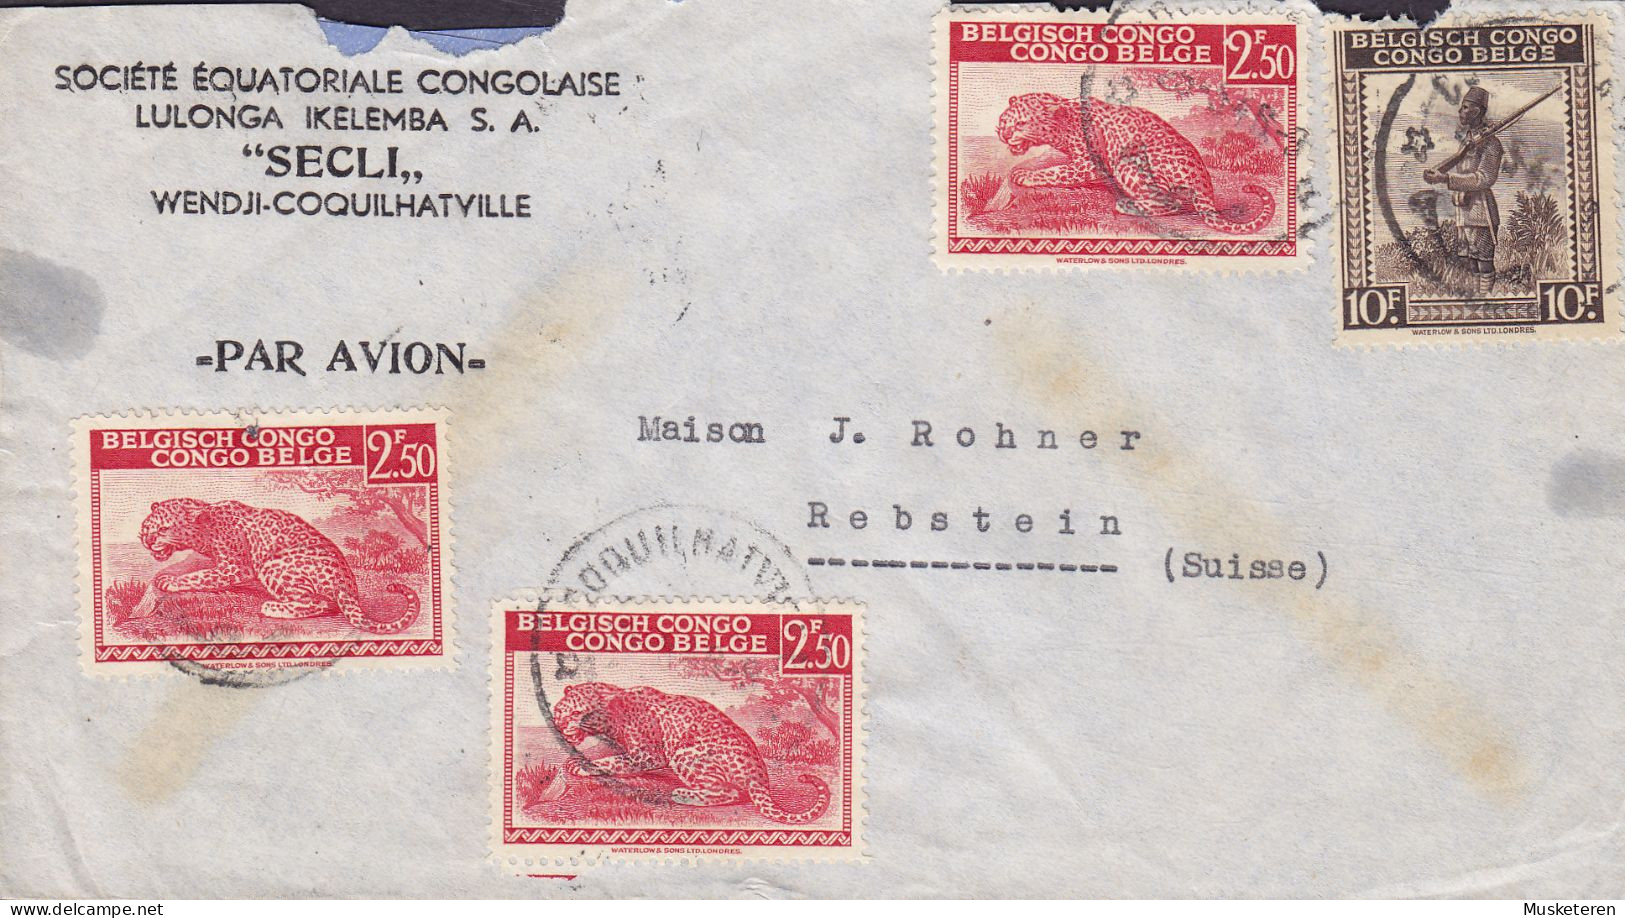 Belgian Congo Par Avion 'SECLI' COQUILHATVILLE 1946 Cover Brief Lettre REBSTEIN Suisse Schweiz 3x Leopard & Akari - Covers & Documents